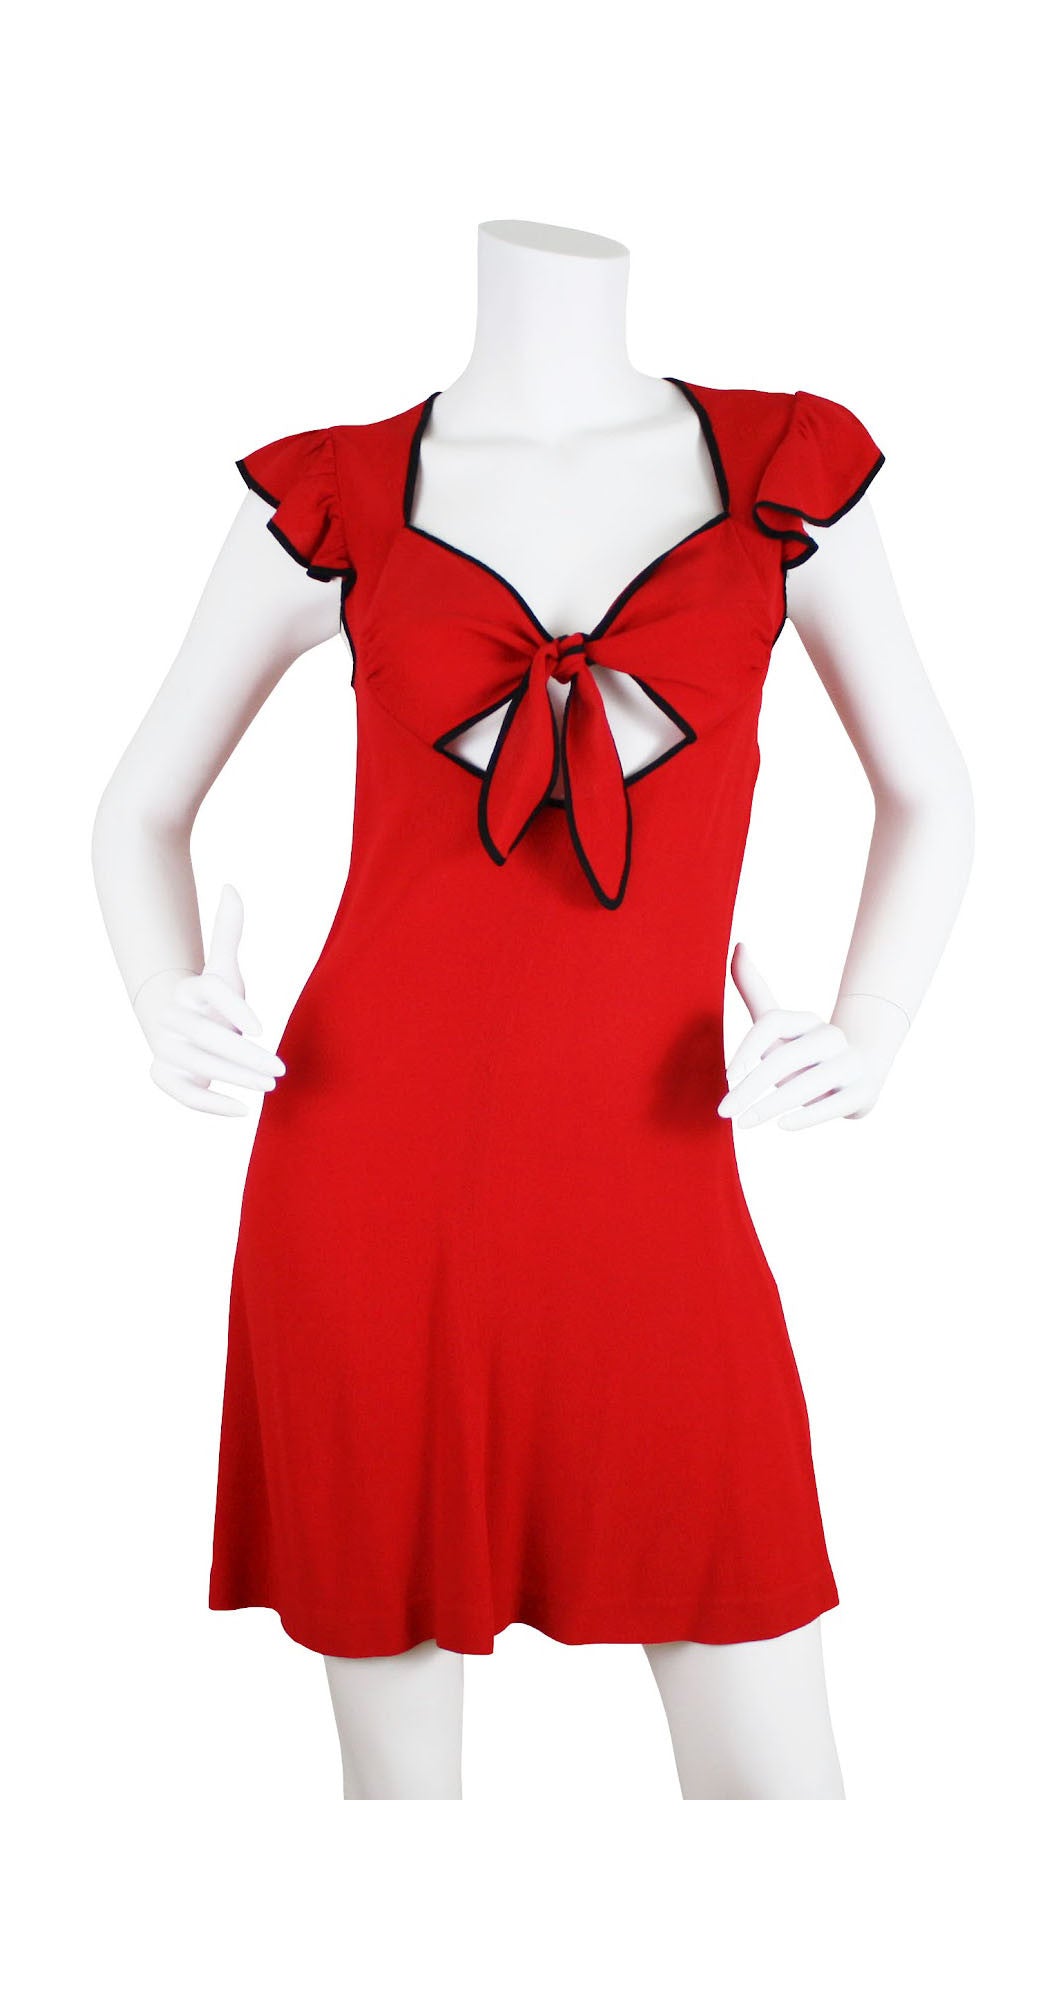 Ossie Clark Design 1970's Red Moss Crepe Dress